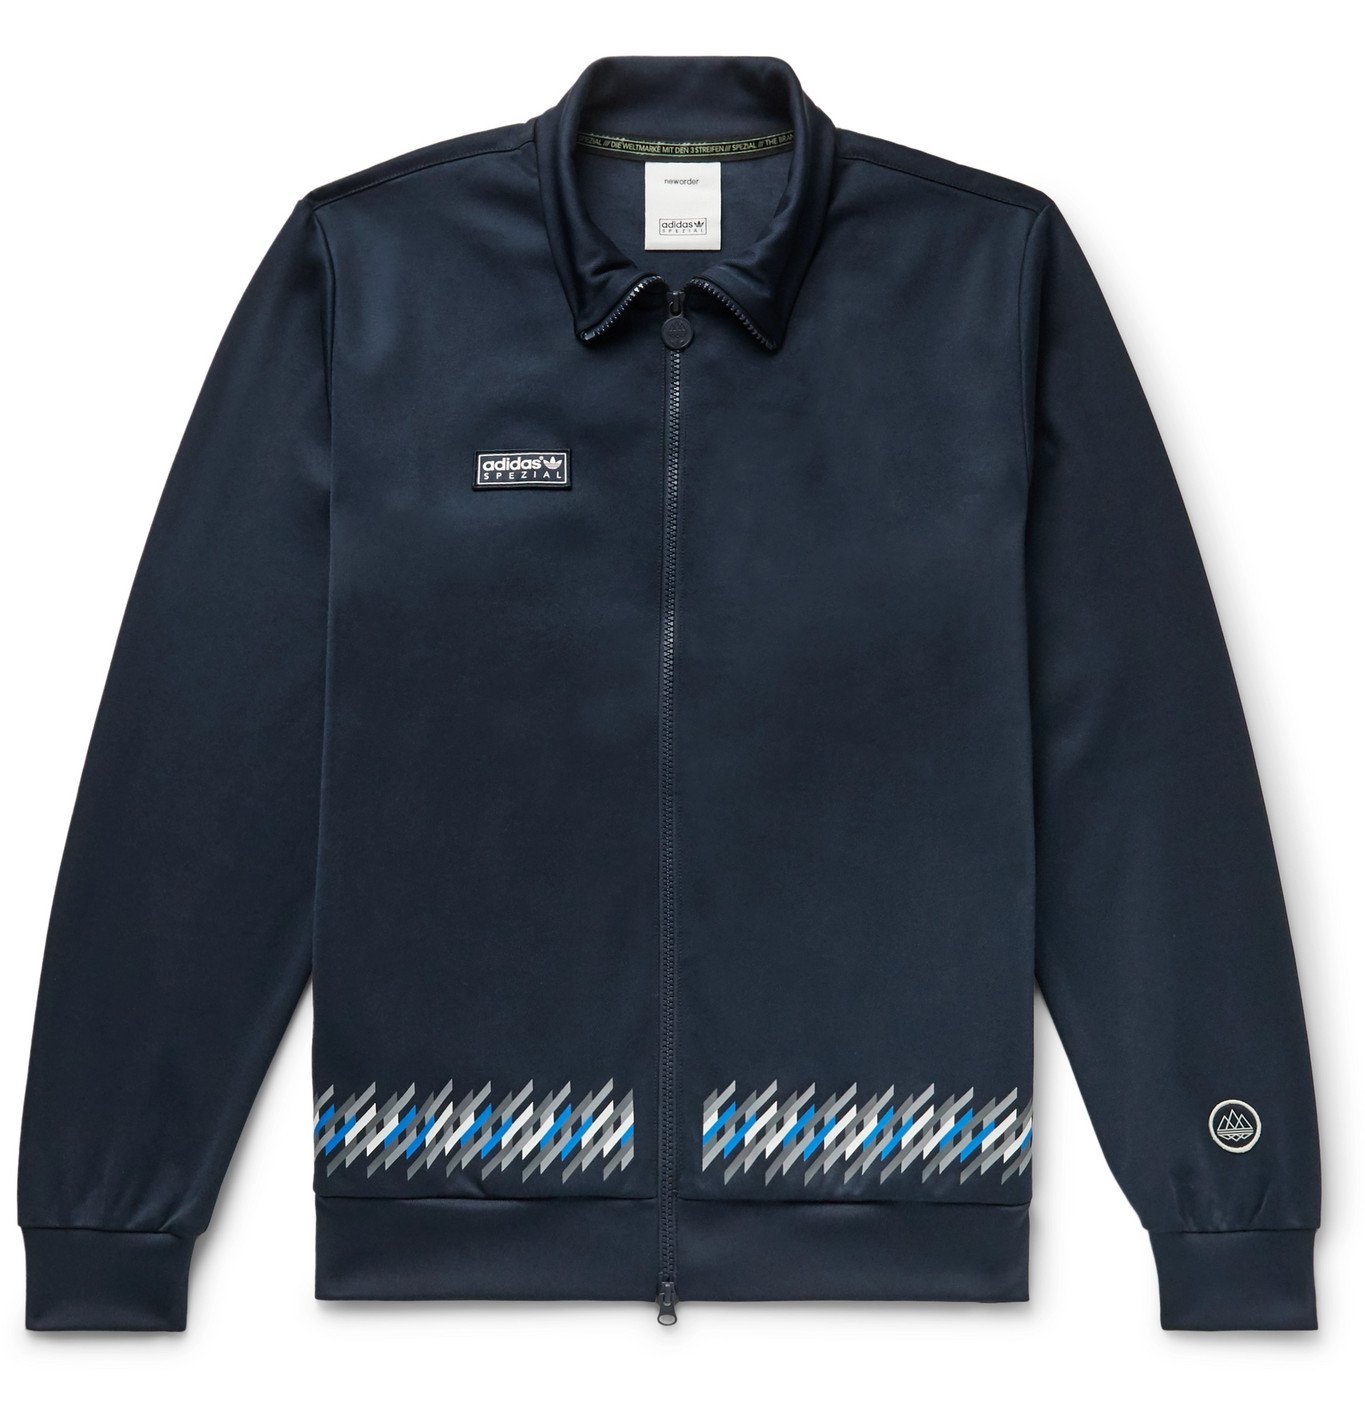 adidas spezial jacket blue